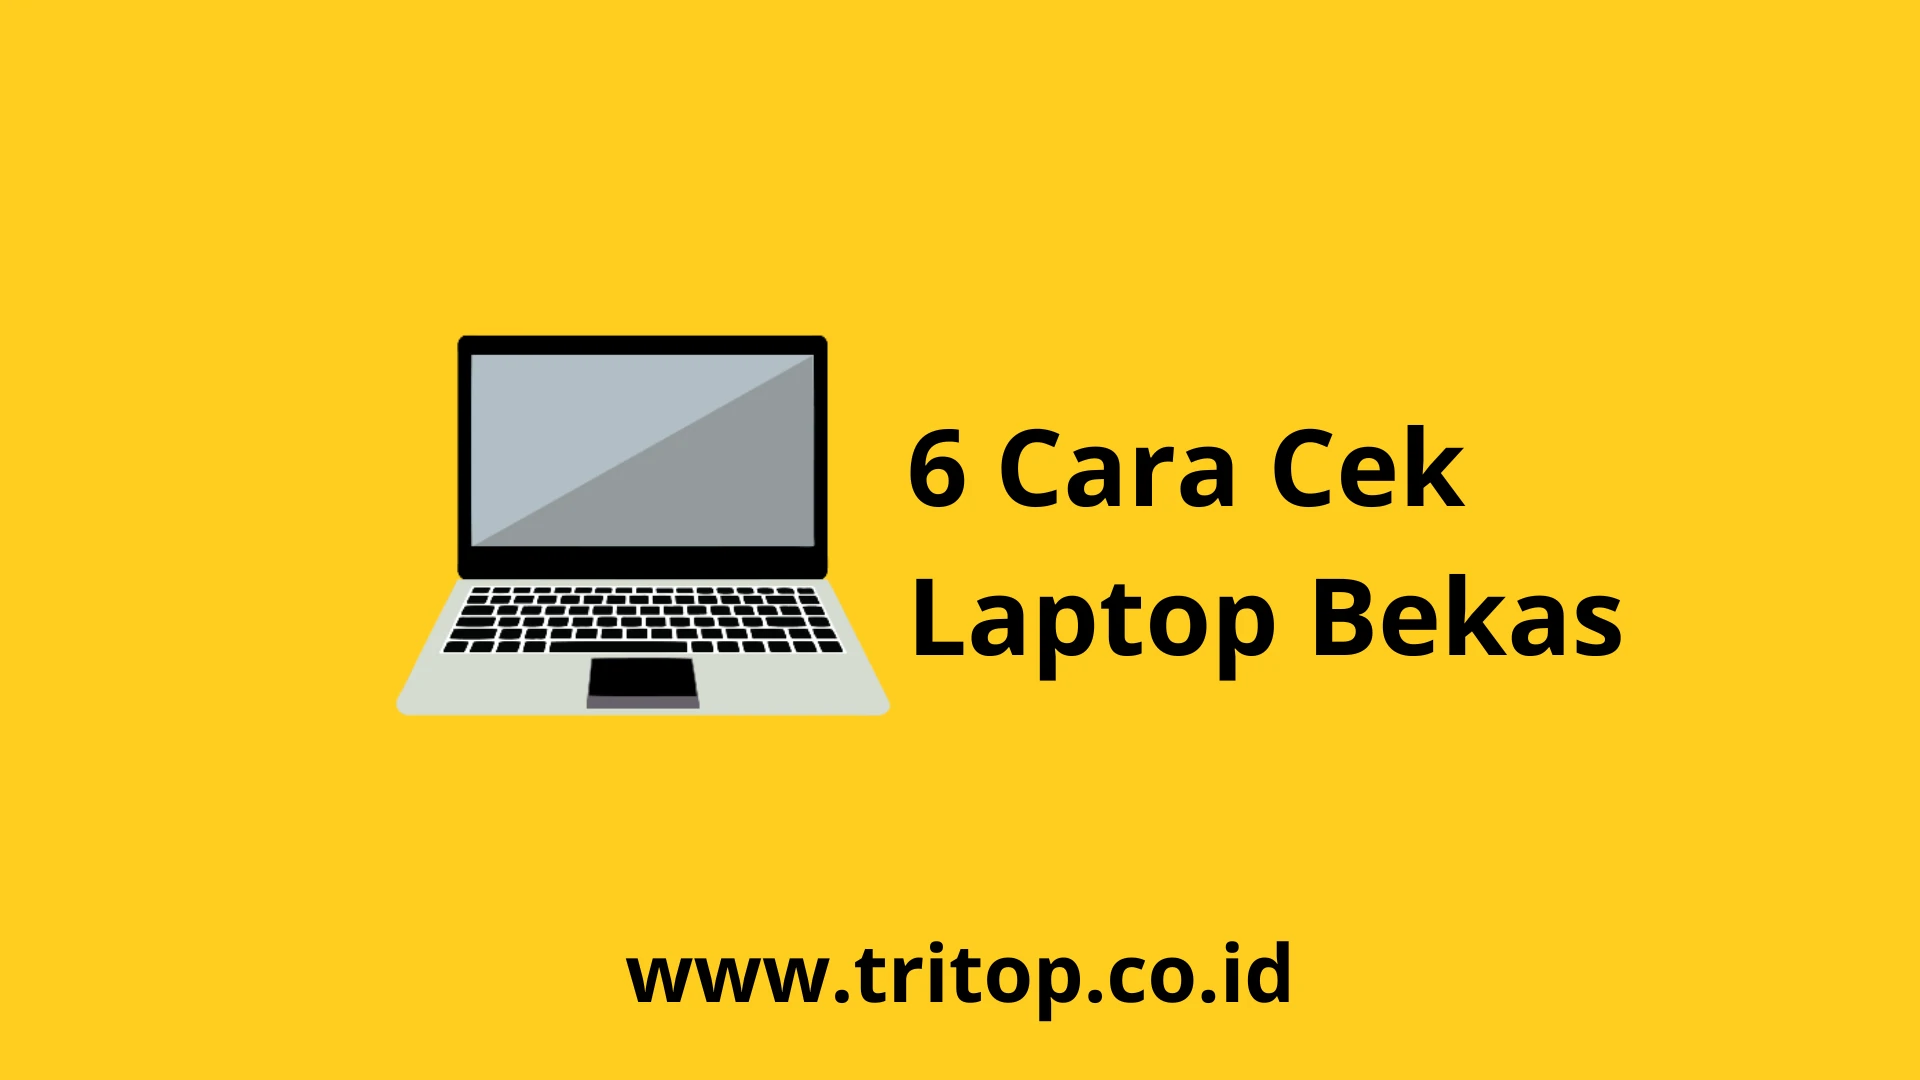 Cara Cek Laptop Bekas Tritop.co.id